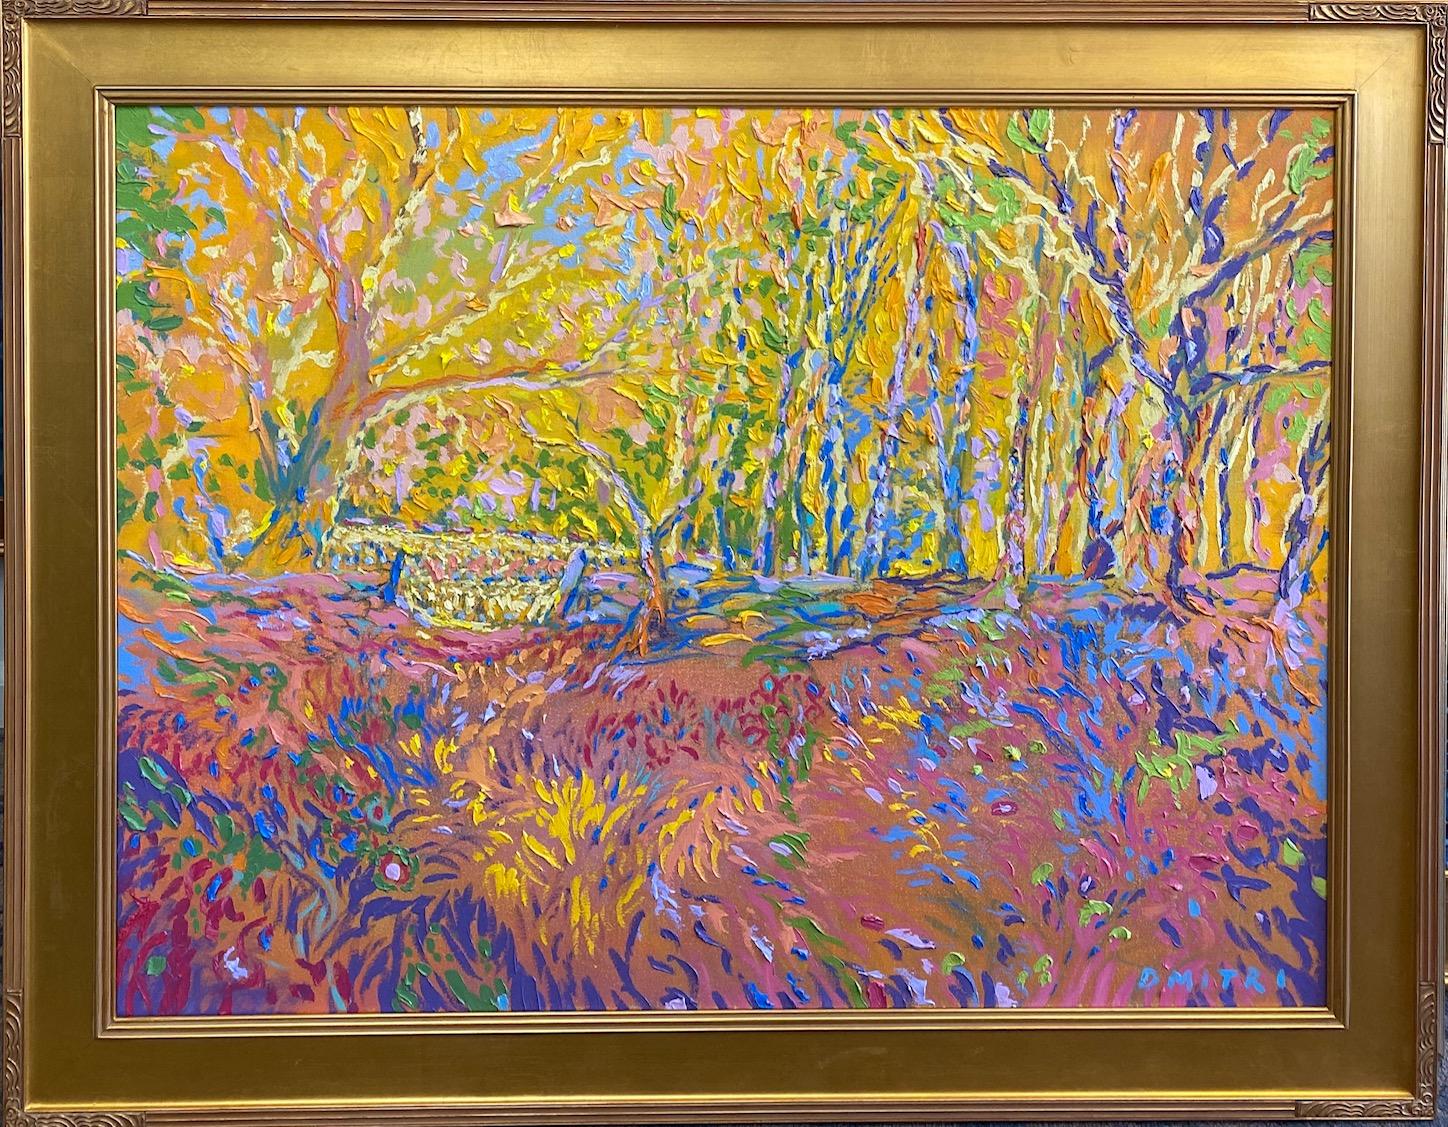 Dmitri Wright Landscape Painting - Fractals Quaver Beyond the Meadow, original 30x40 expressionist landscape